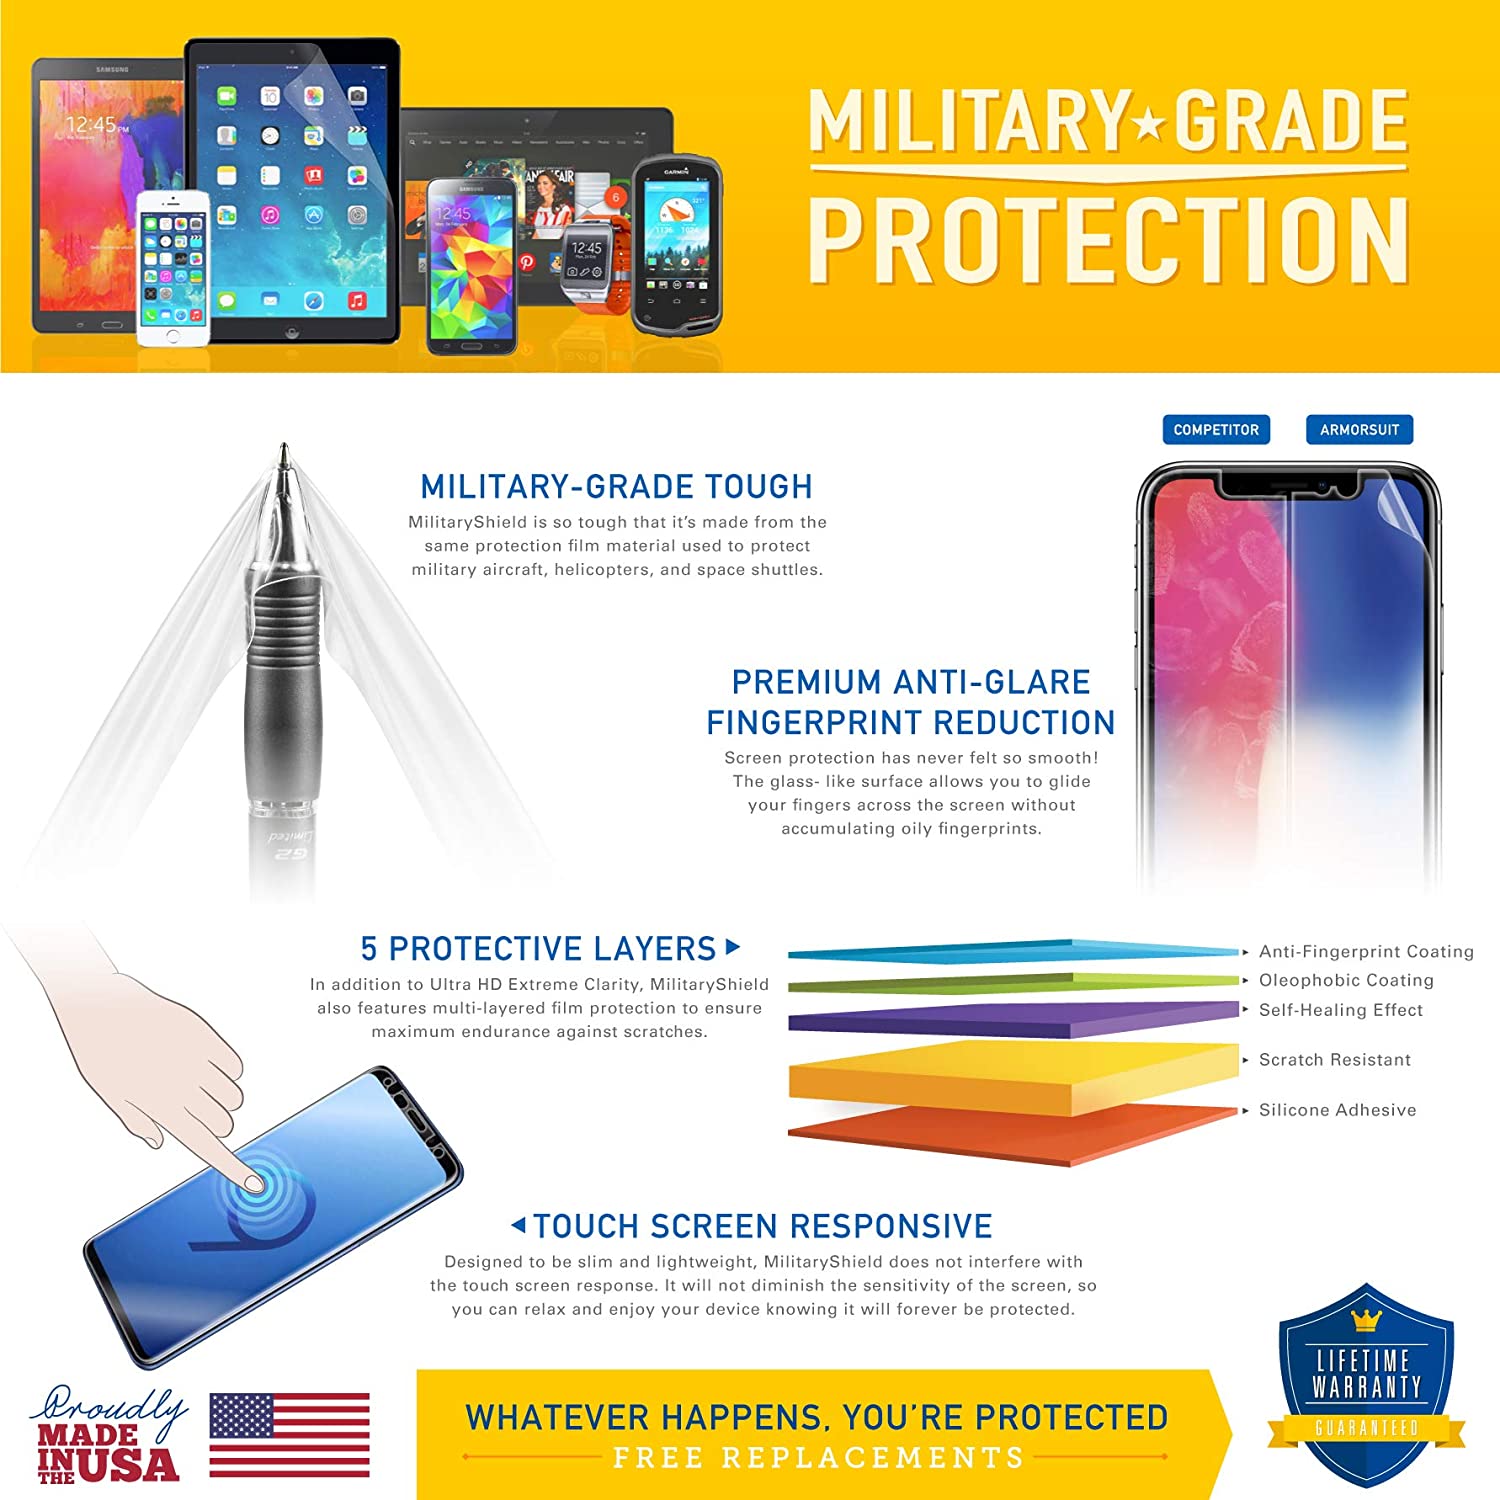 [2 Pack] Asus Zenfone 5Q Screen Protector (Case Friendly)